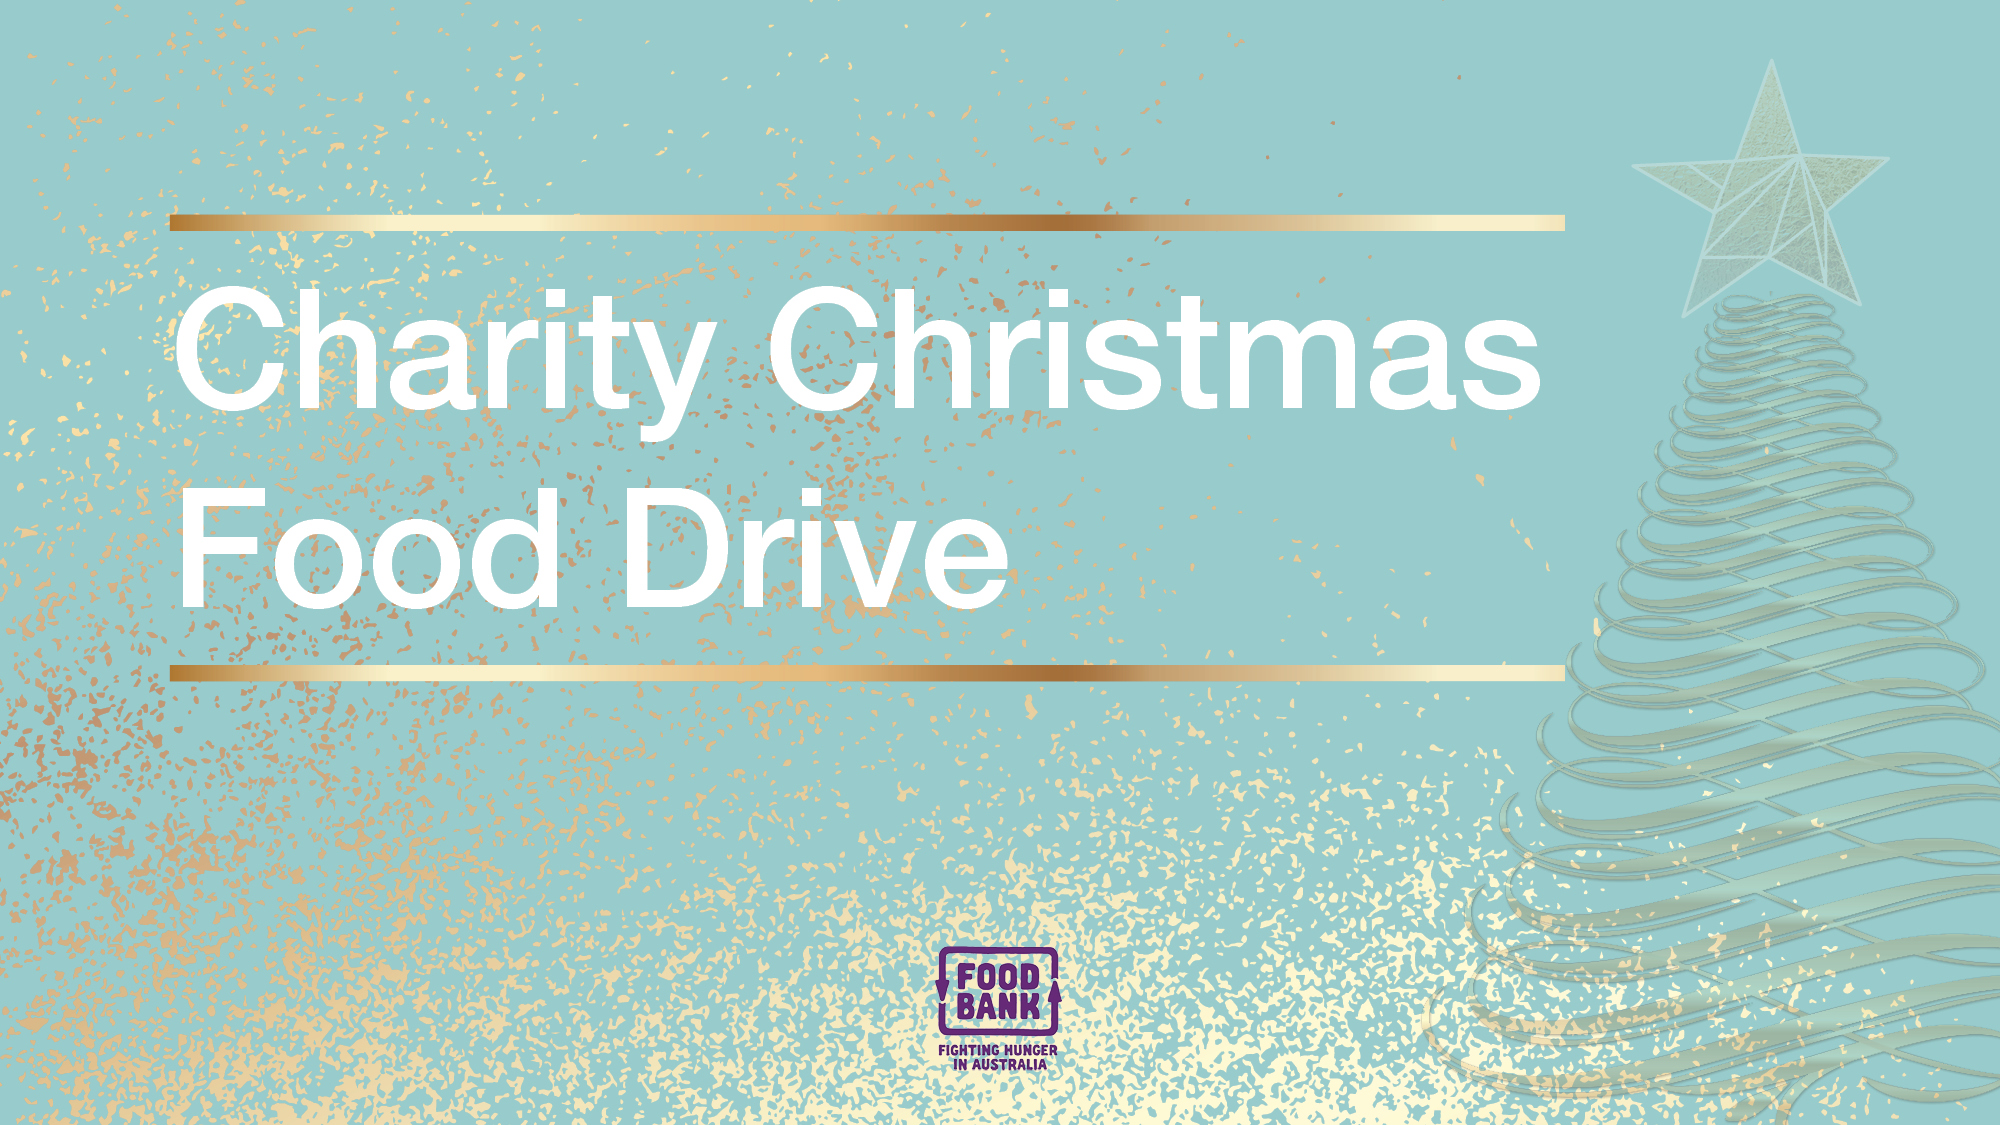 Christmas Charity Drive